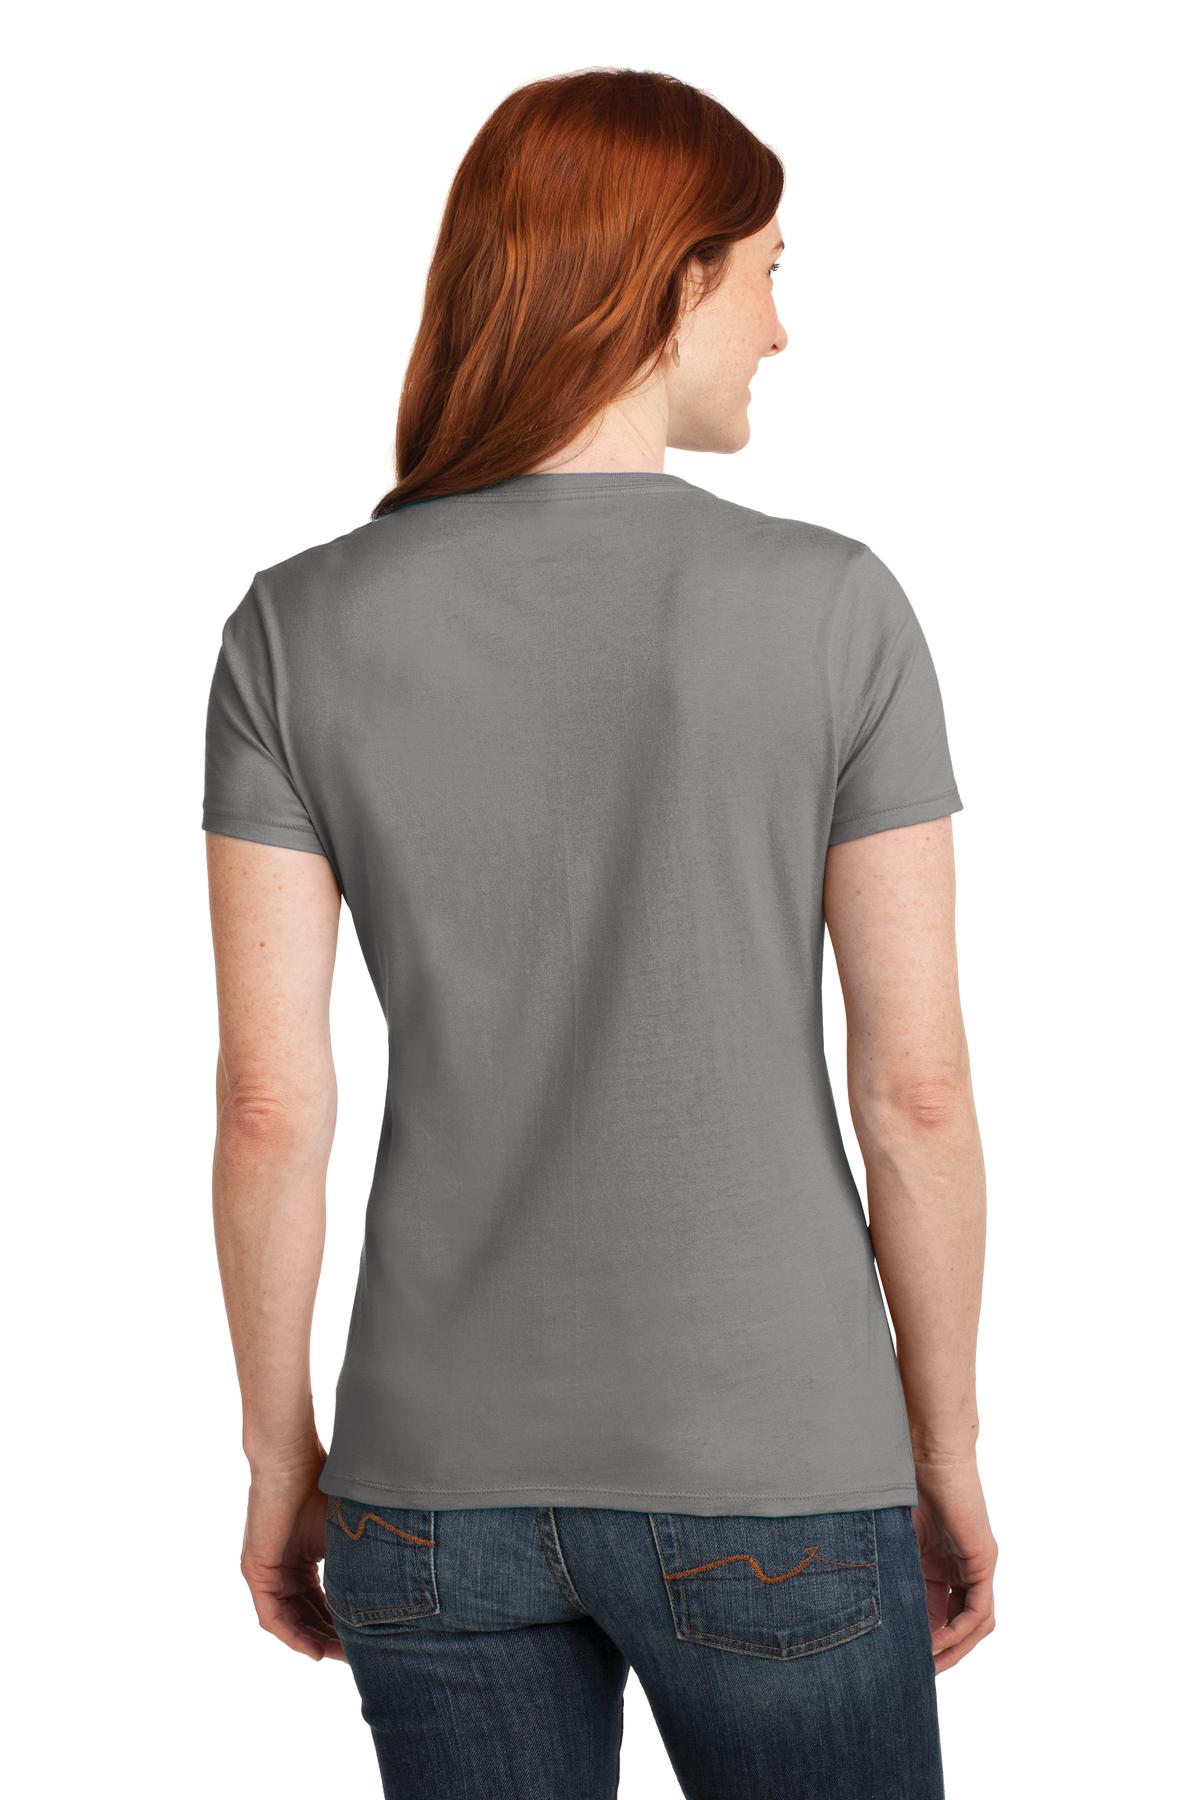 Hanes Ladies Perfect-T Cotton V-Neck T-Shirt. S04V